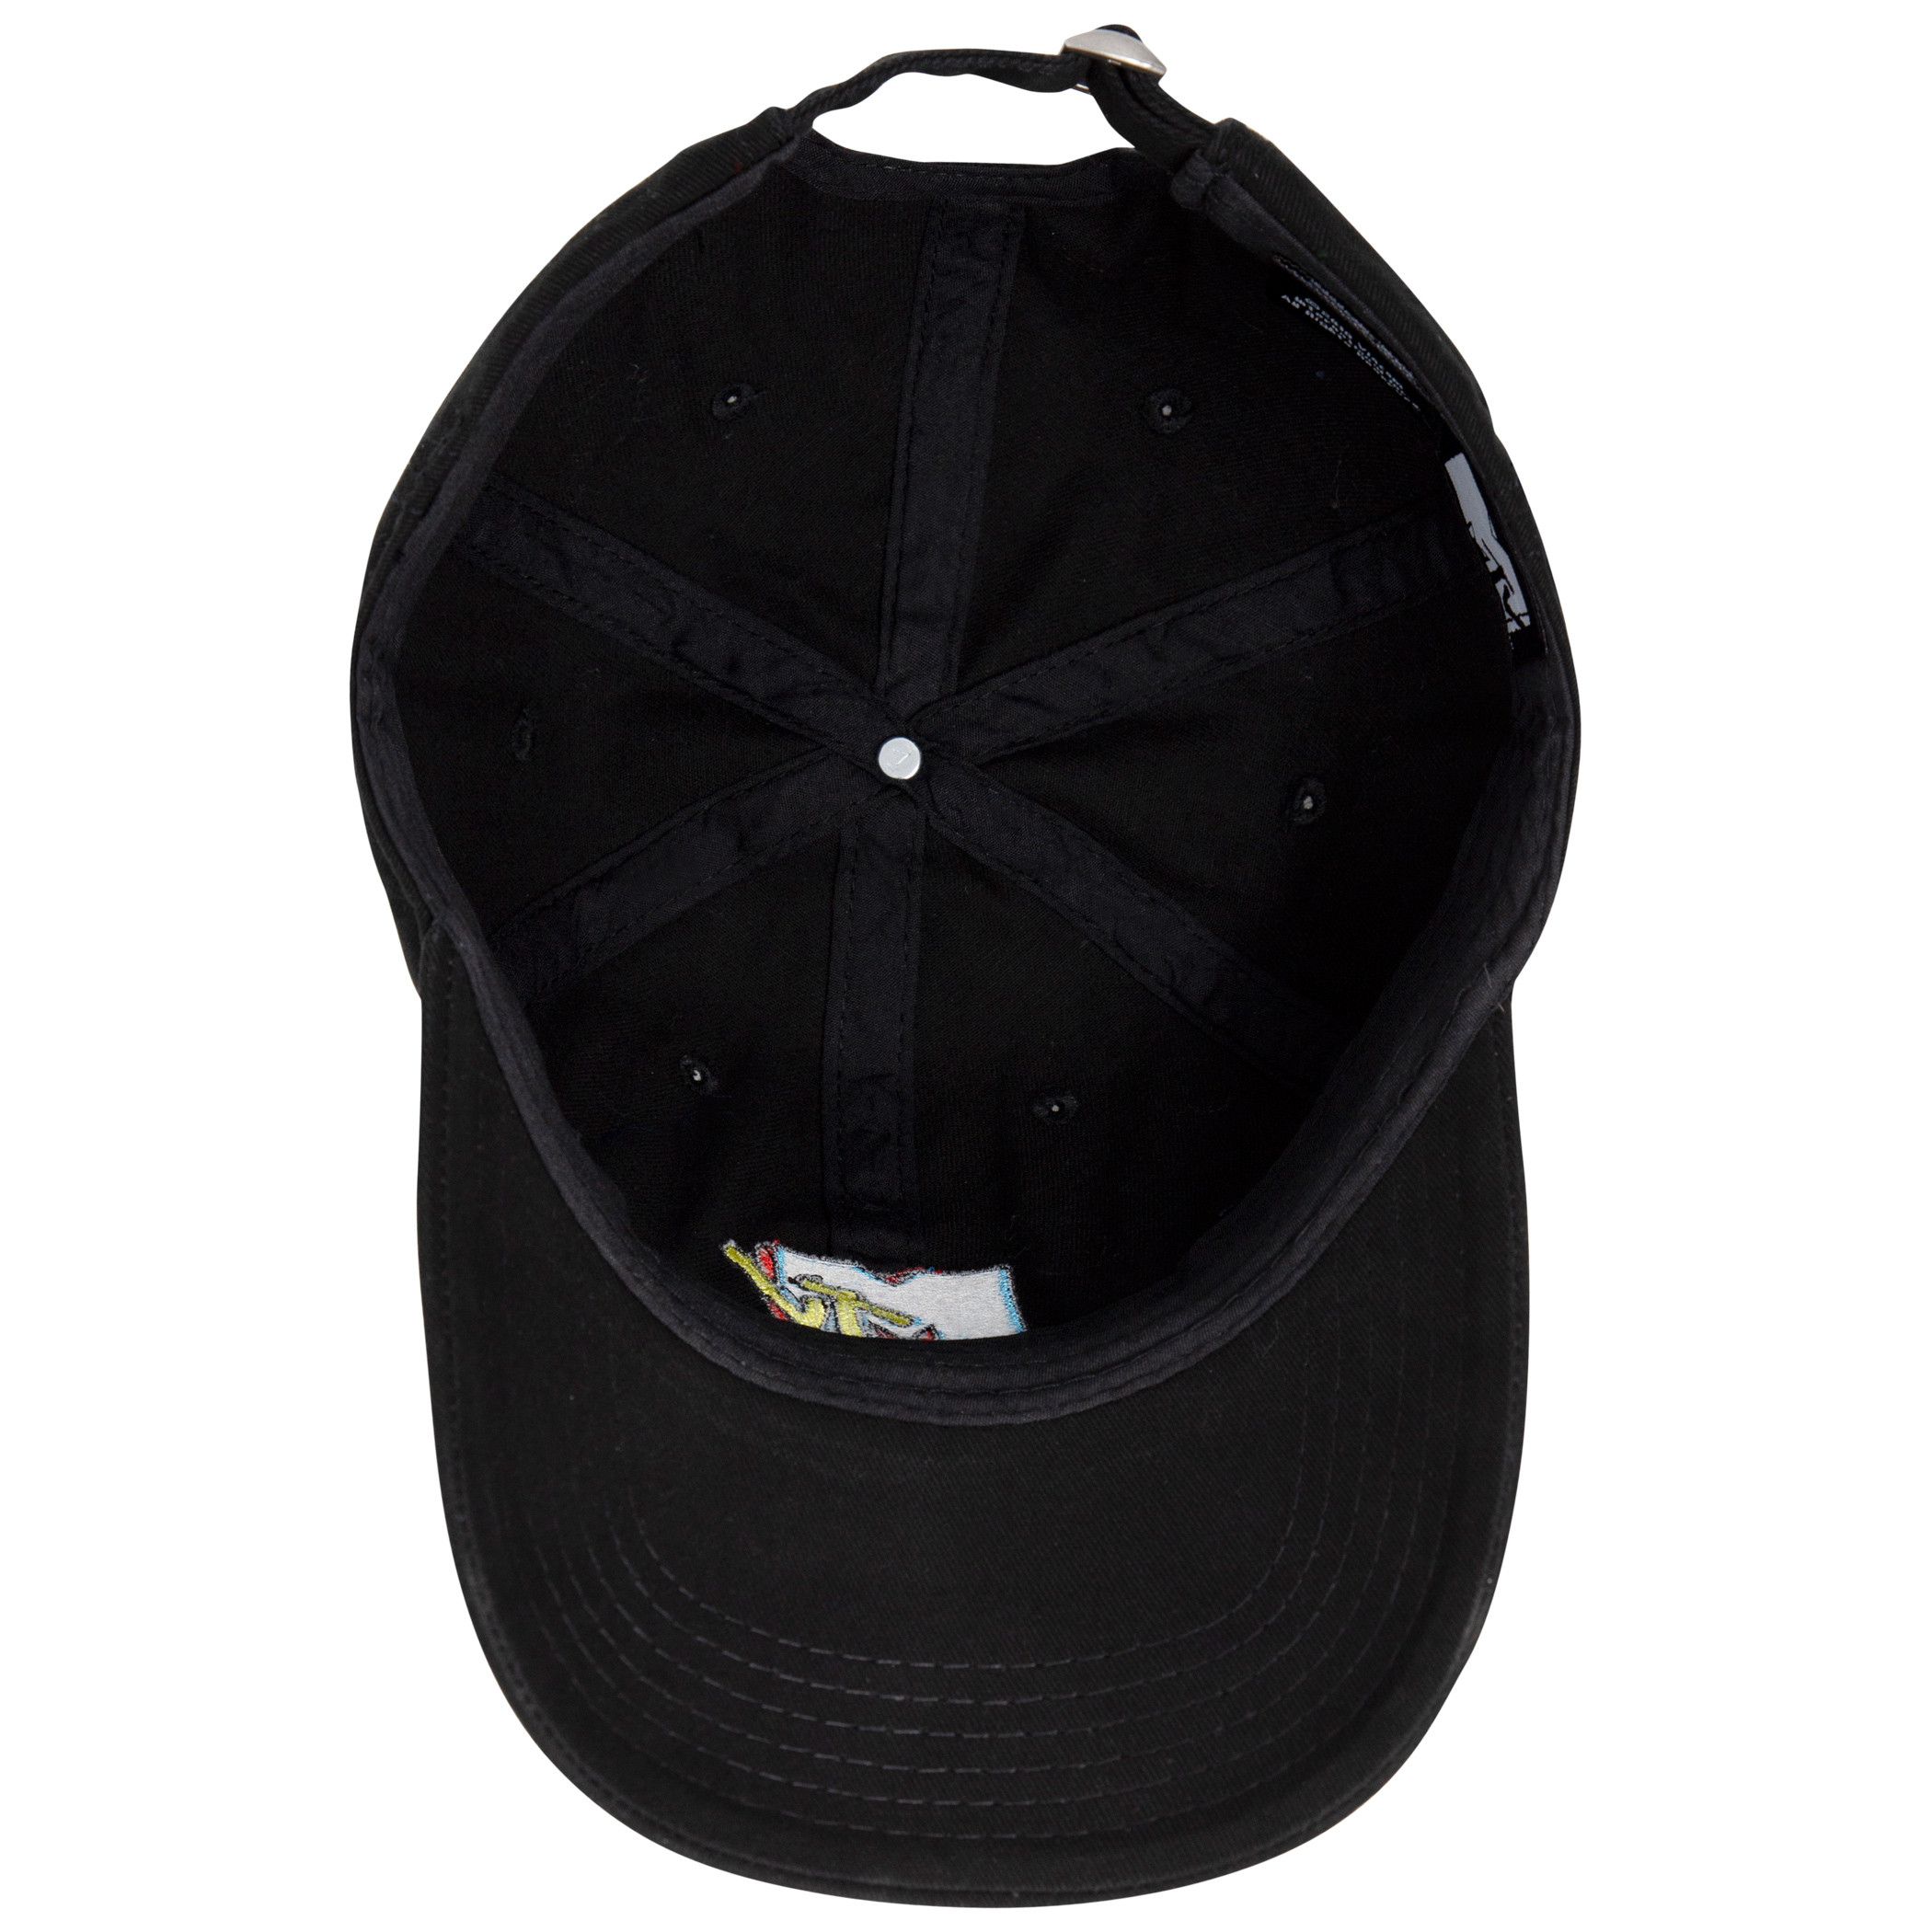 MTV Classic Logo Black Strapback Hat